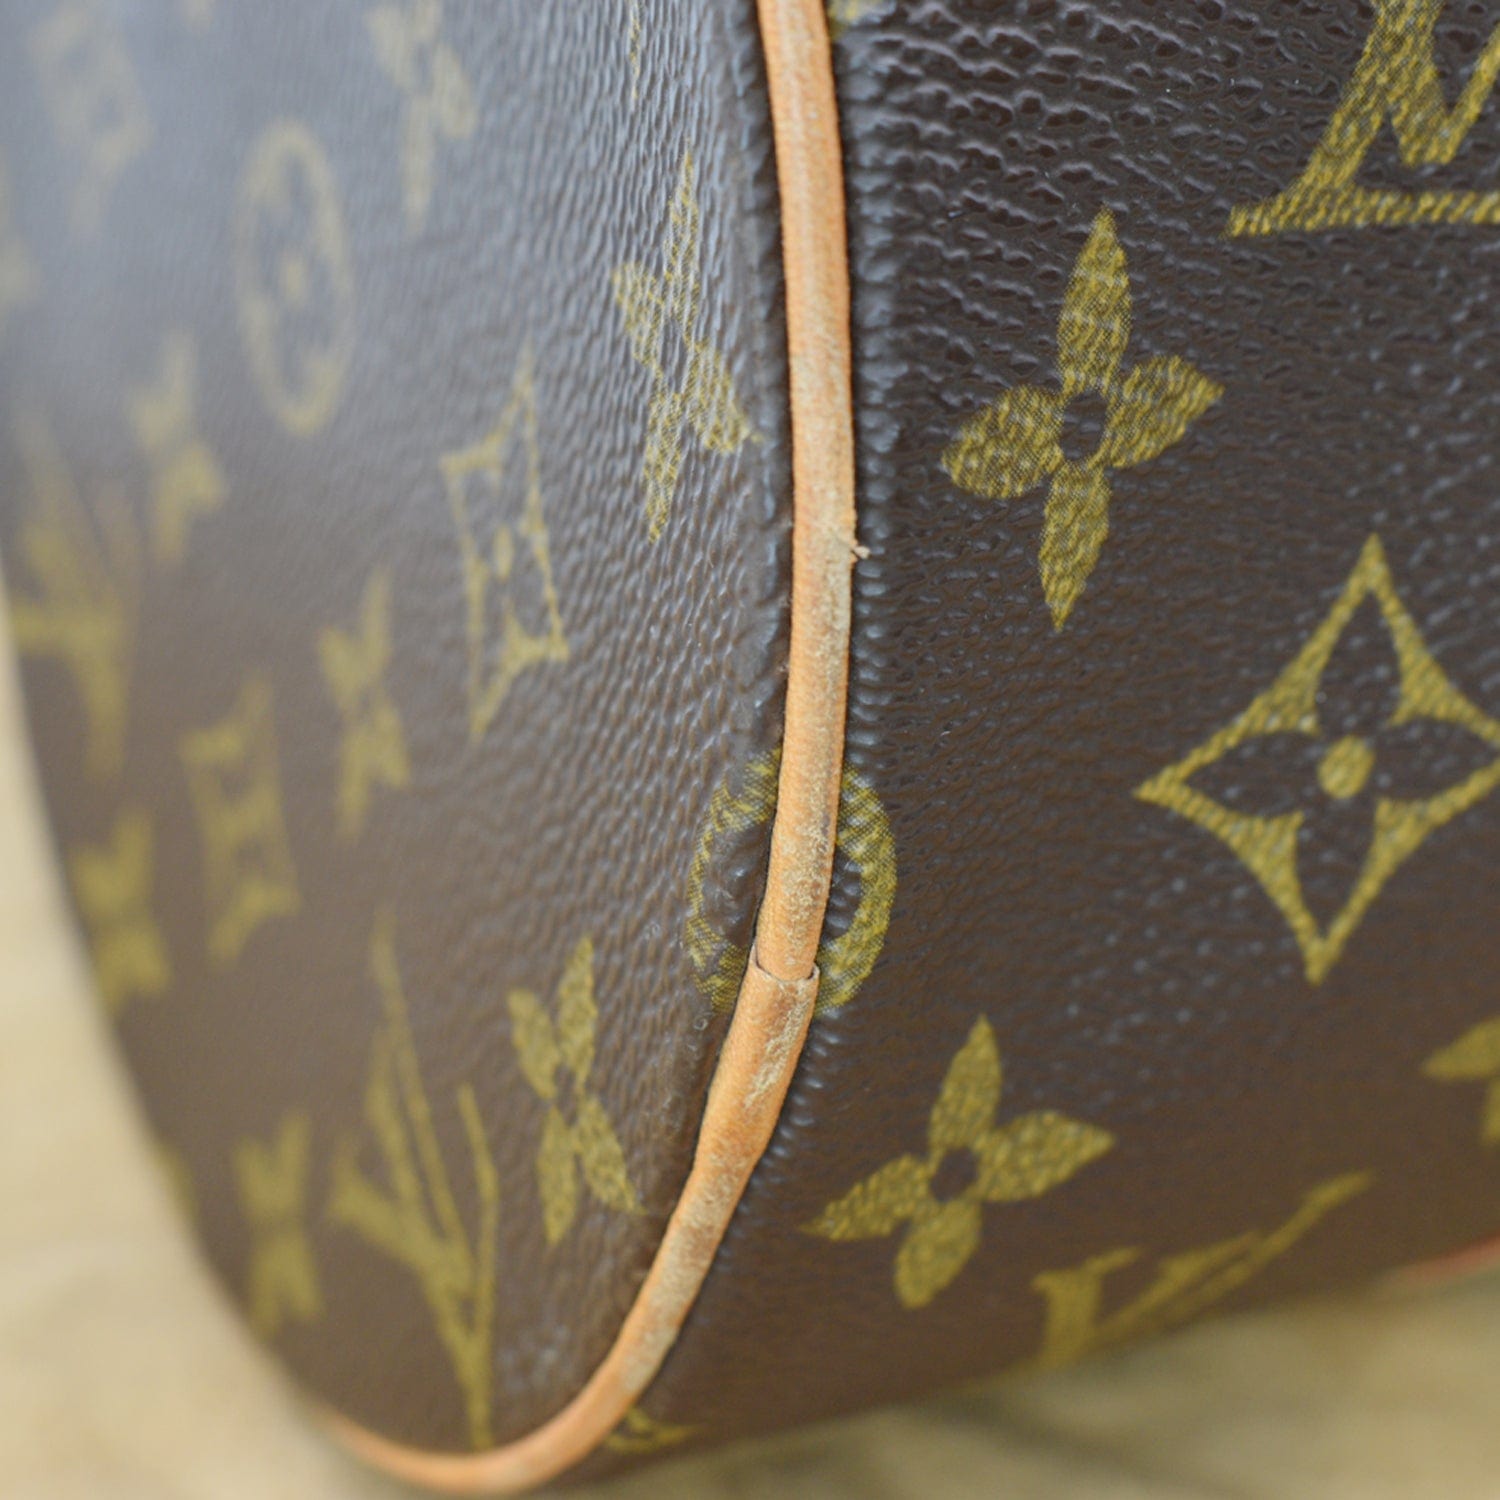 Papillon leather handbag Louis Vuitton Brown in Leather - 33354945